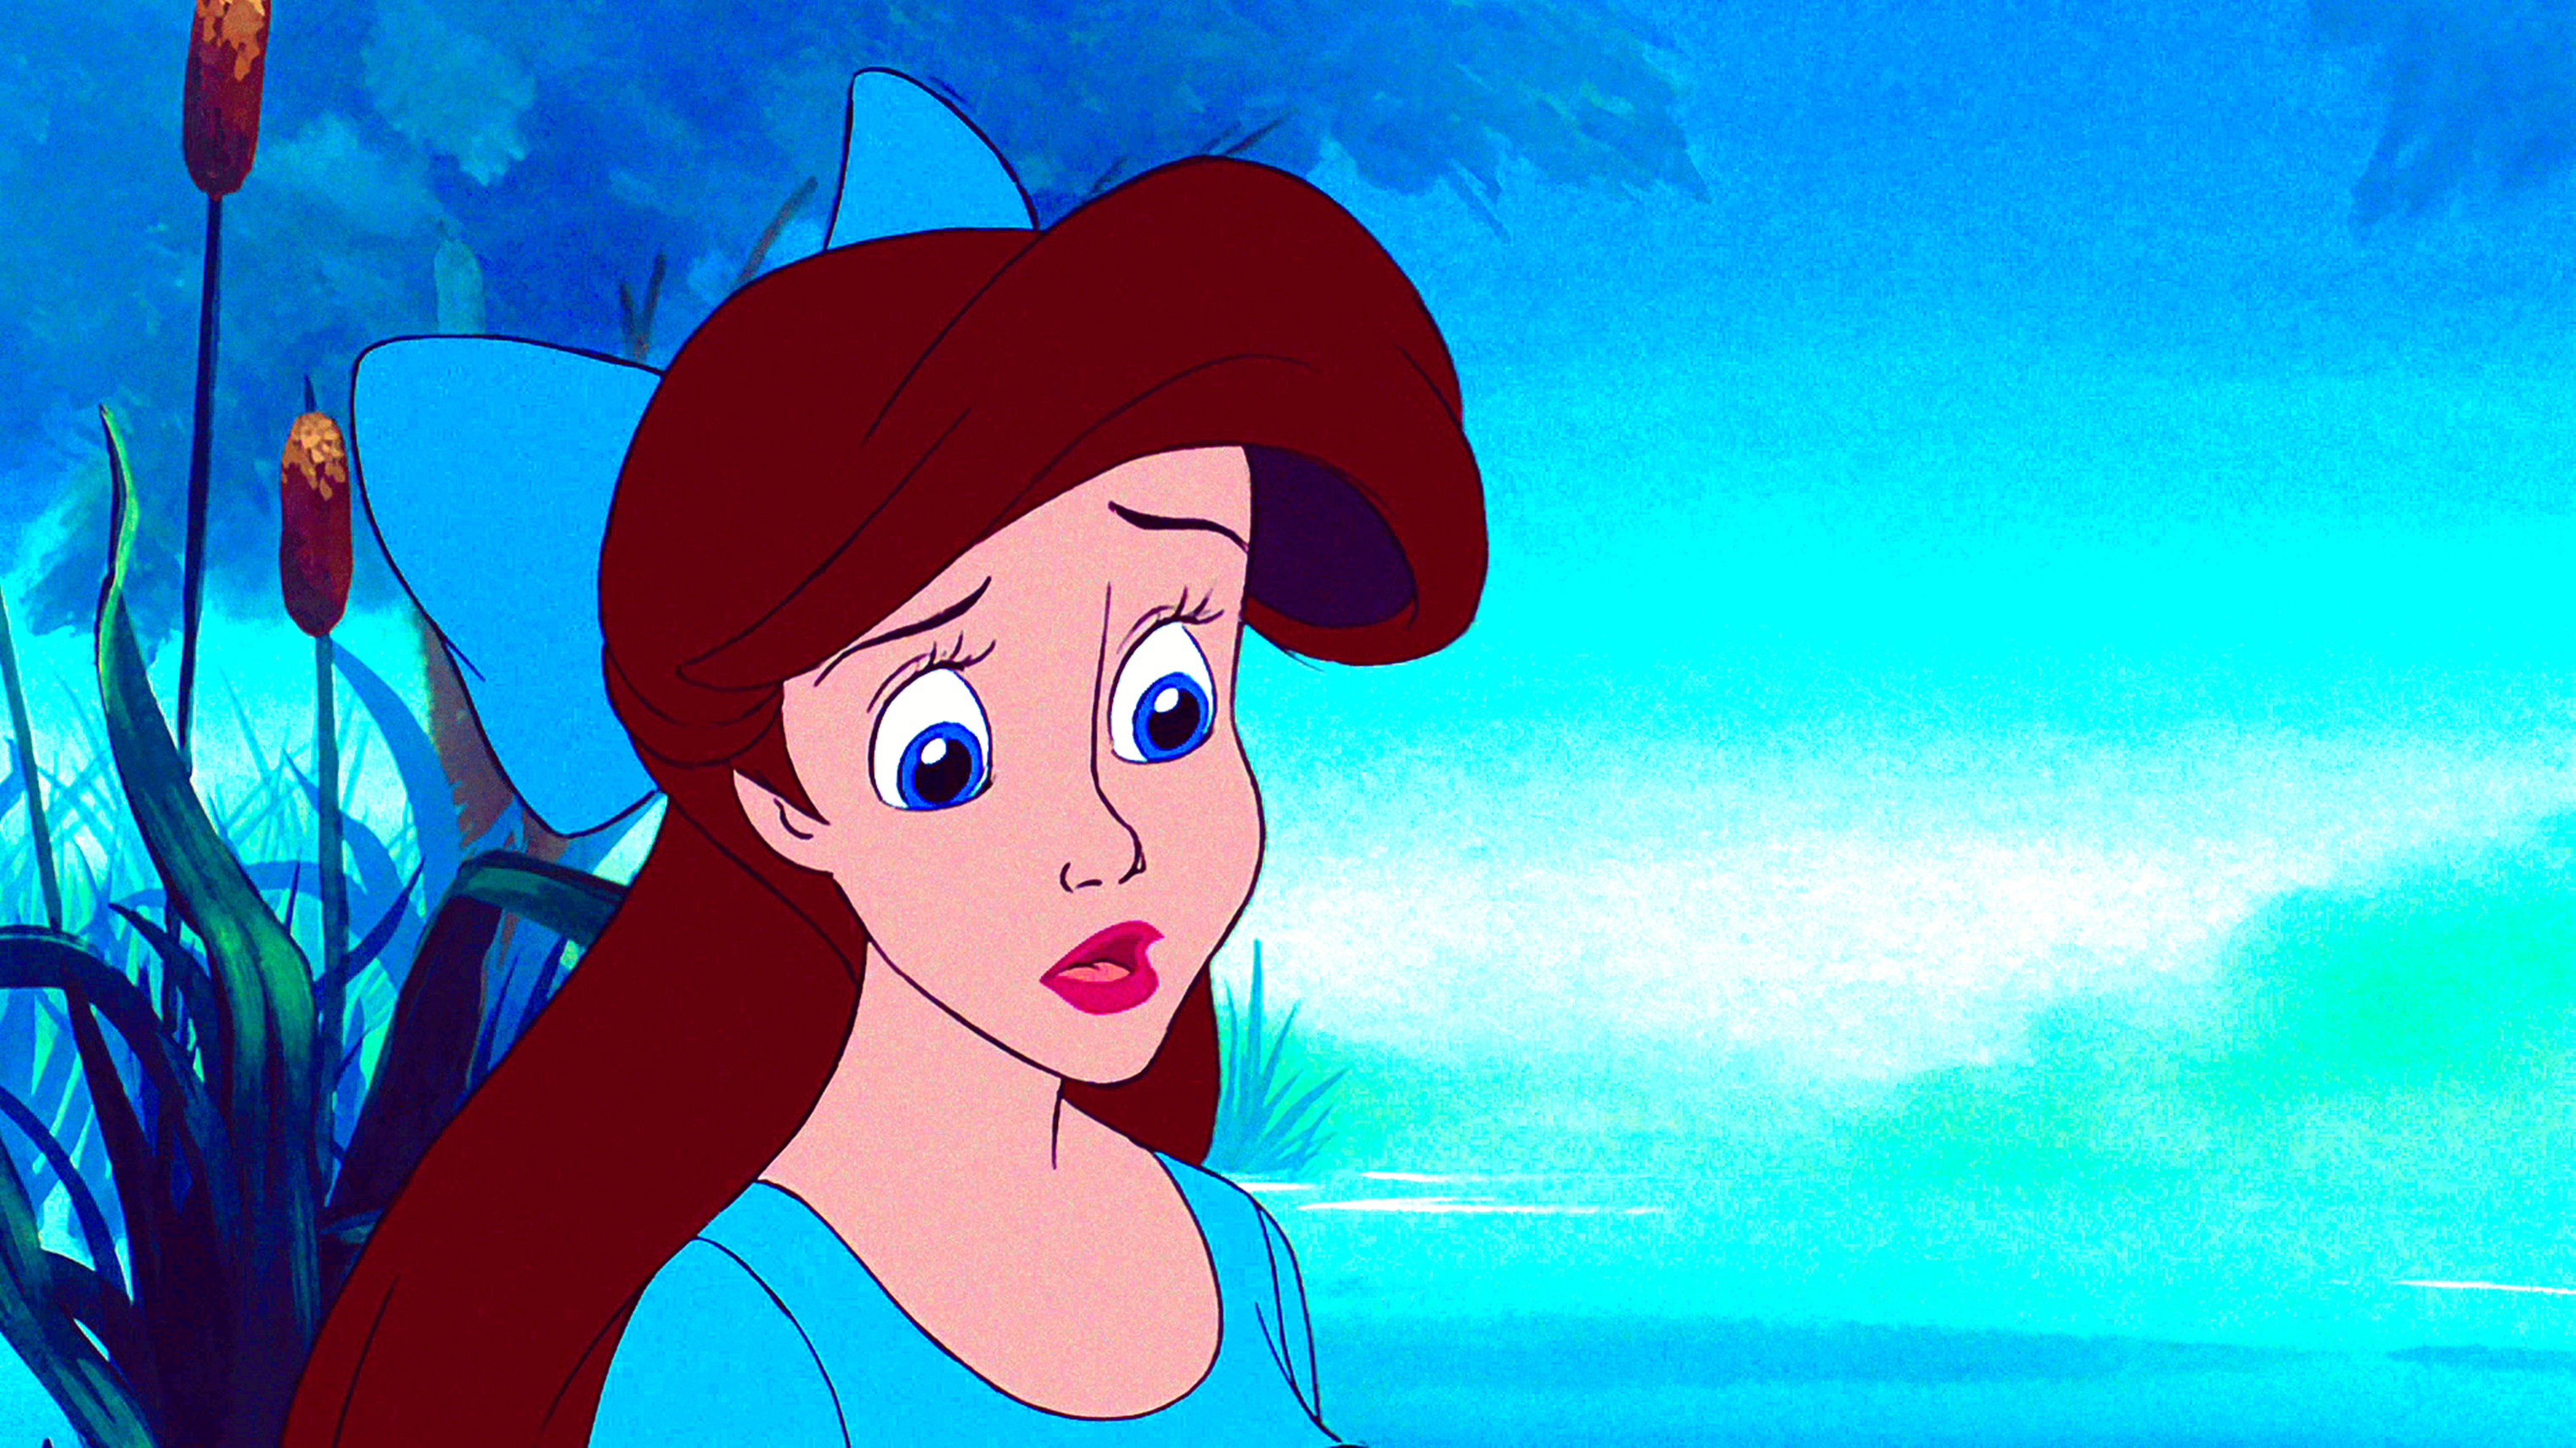 Walt Disney Screencapture of Princess Ariel from "The Little Mermaid&q...